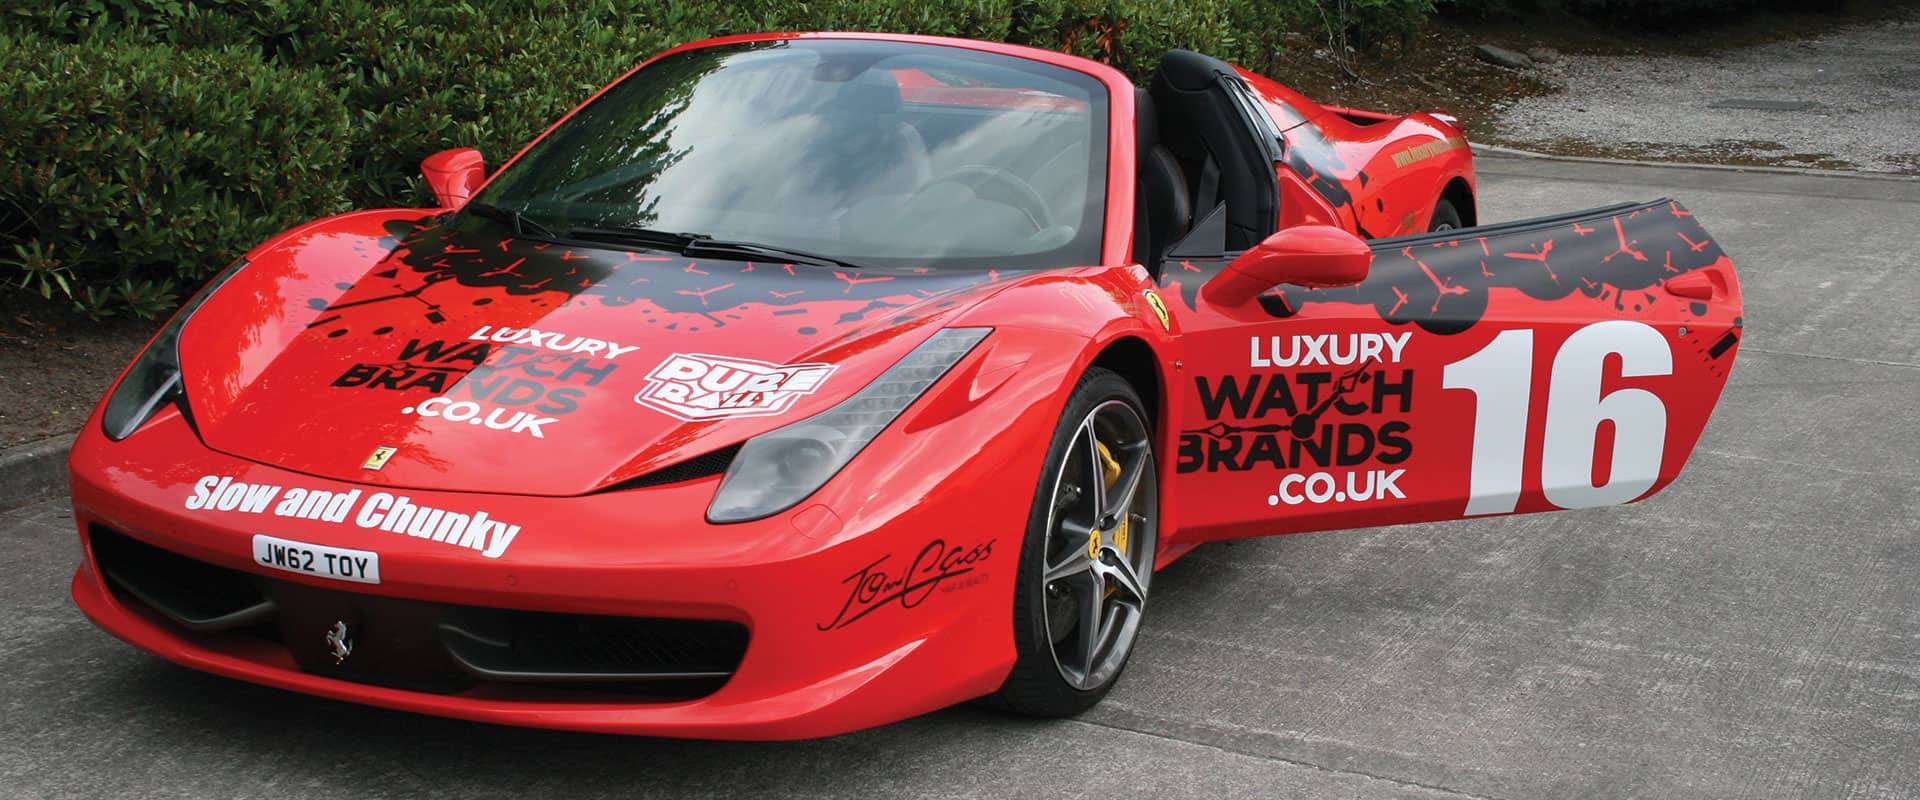 Vehicle with graphic on Ferrari mockup